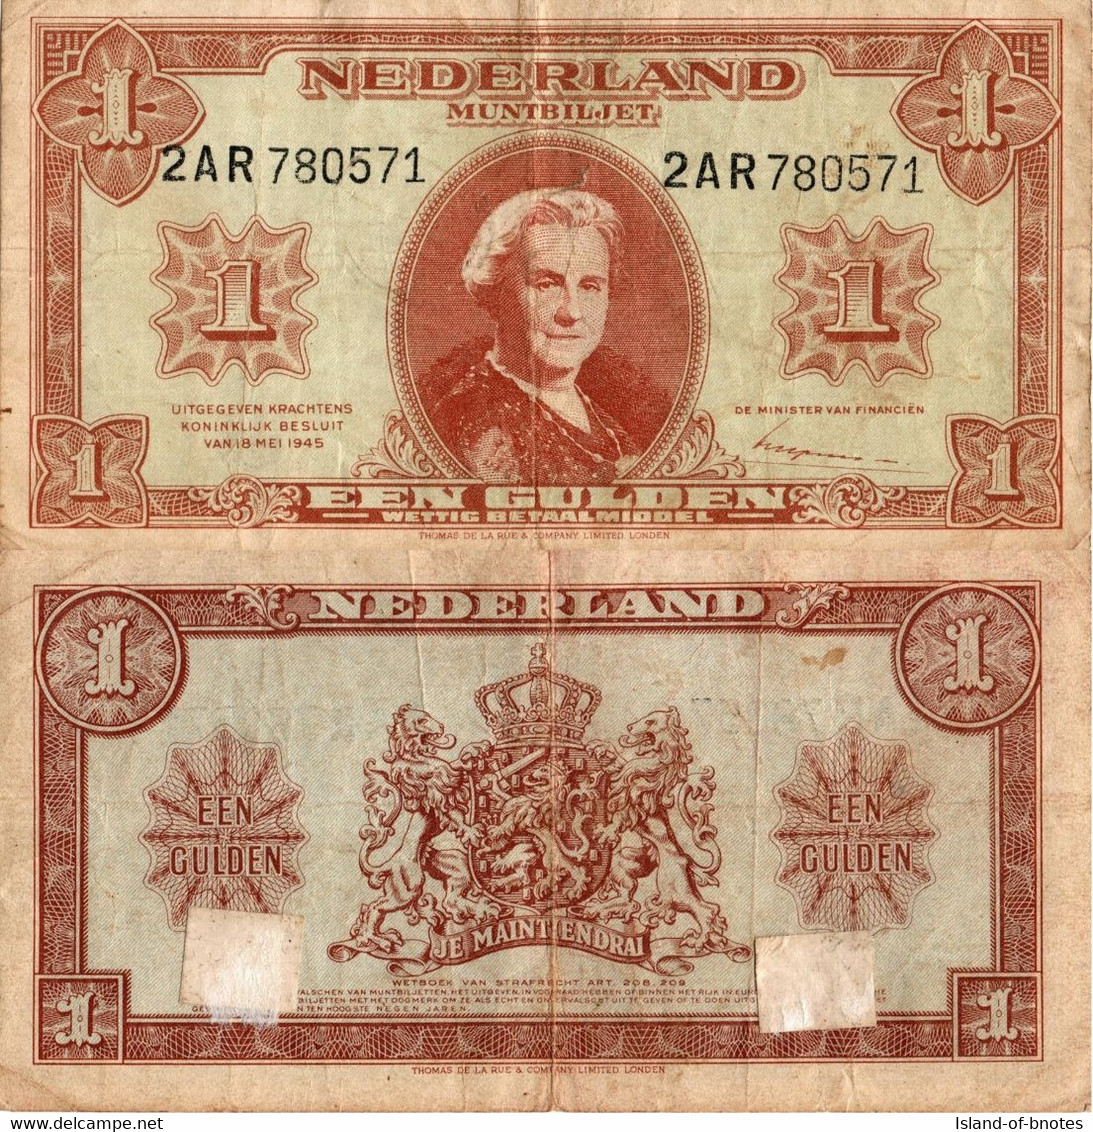 Netherlands / 1 Gulden / 1945 / P-70(a) / VF - 1 Gulde